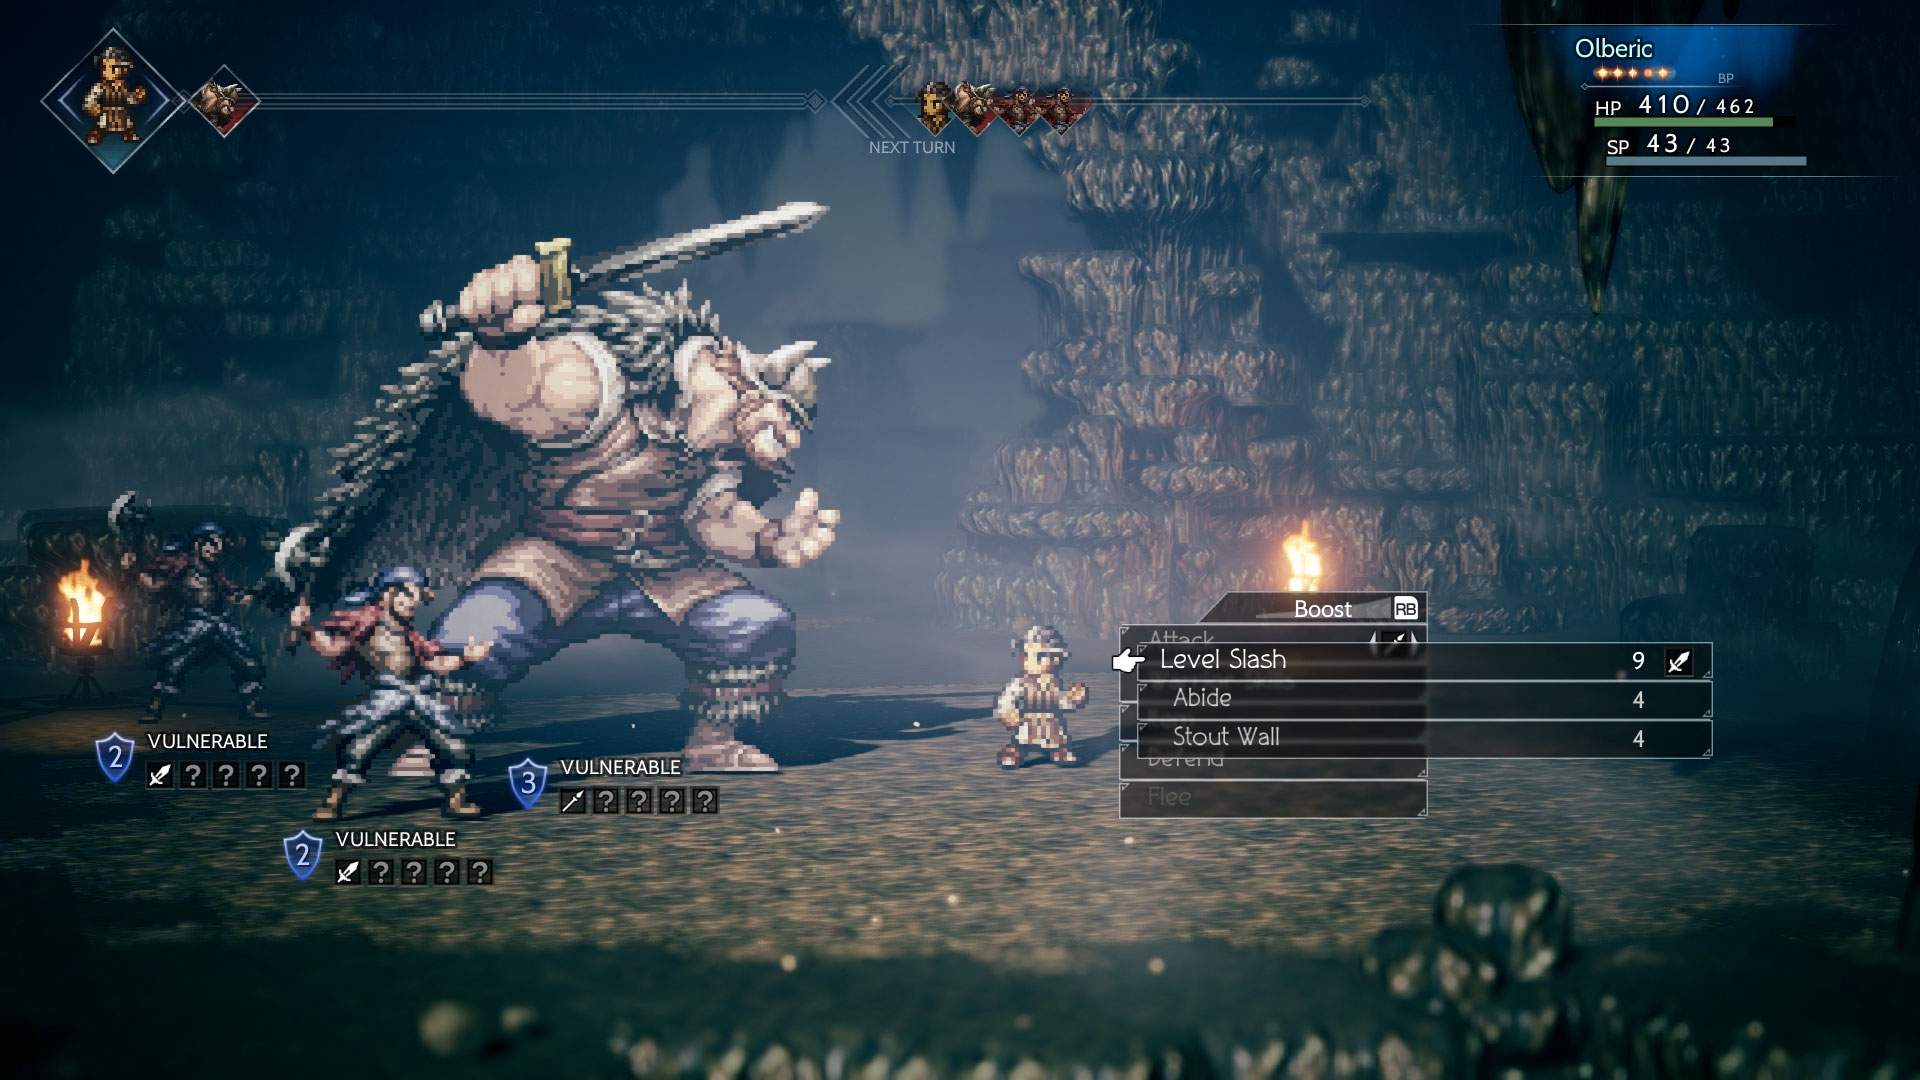 In game battle screenshot showing Olberic in turn based battle against 3 enemies in a dark dungeon.